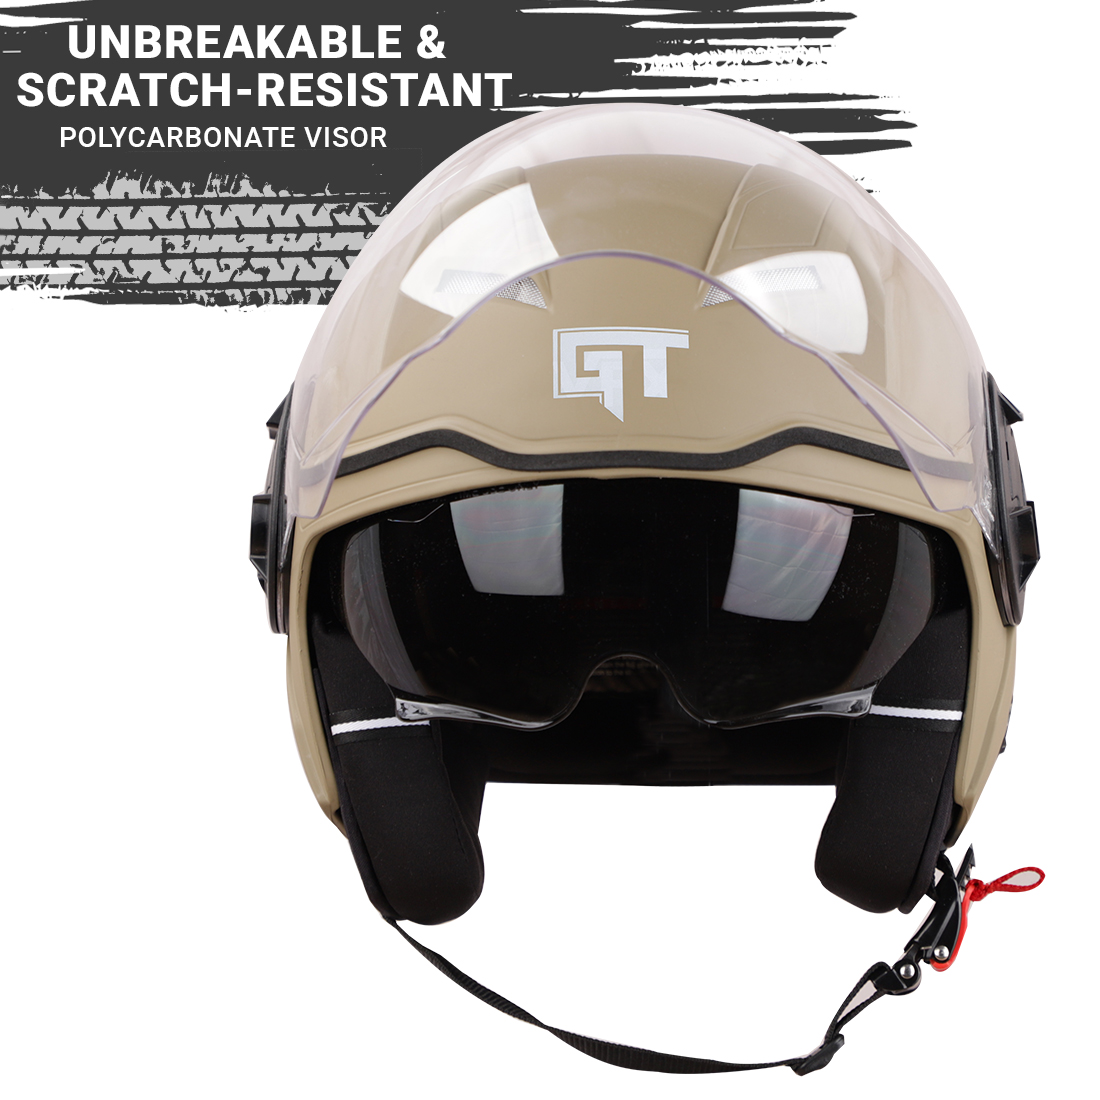 Steelbird GT ISI Certified Open Face Helmet For Men And Women With Inner Sun Shield ( Dual Visor Mechanism ) (Matt Desert Storm)